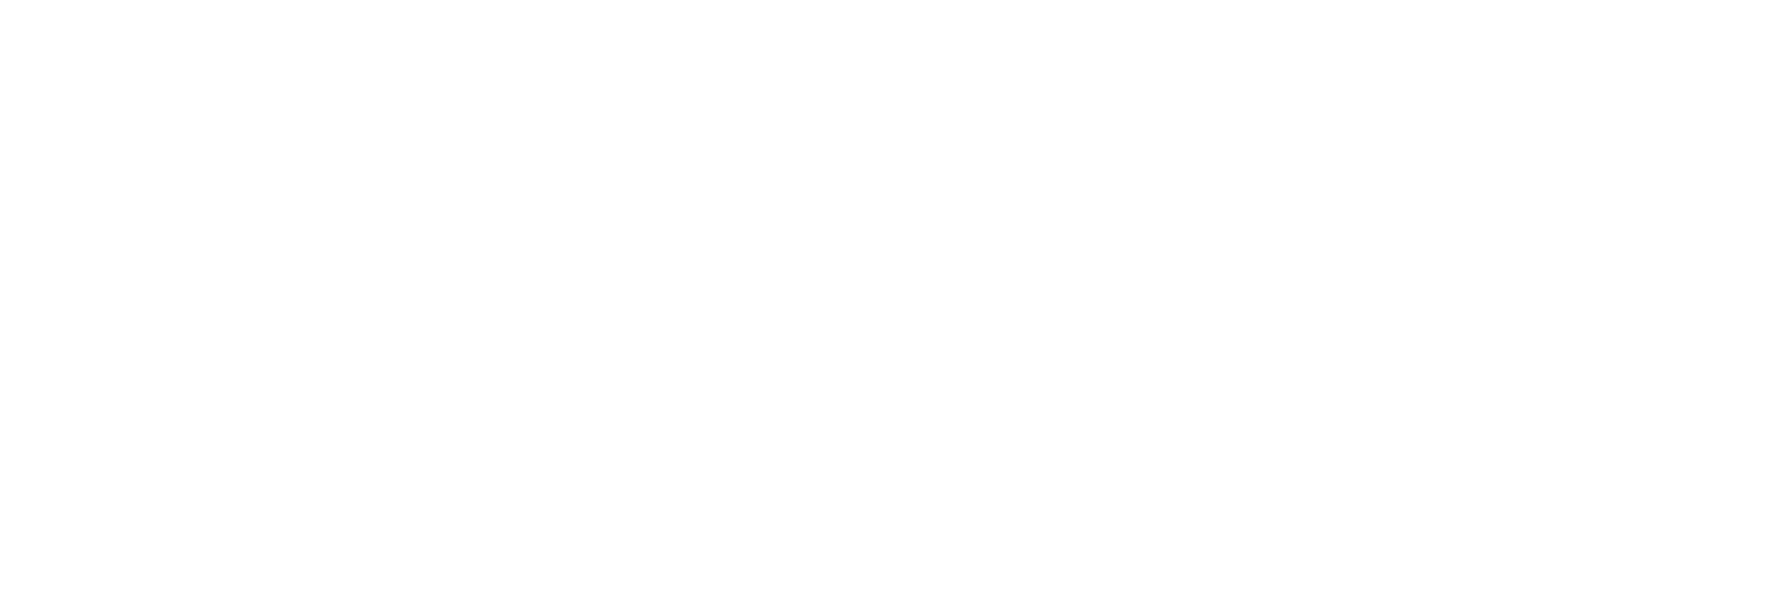 ICS-ISAC